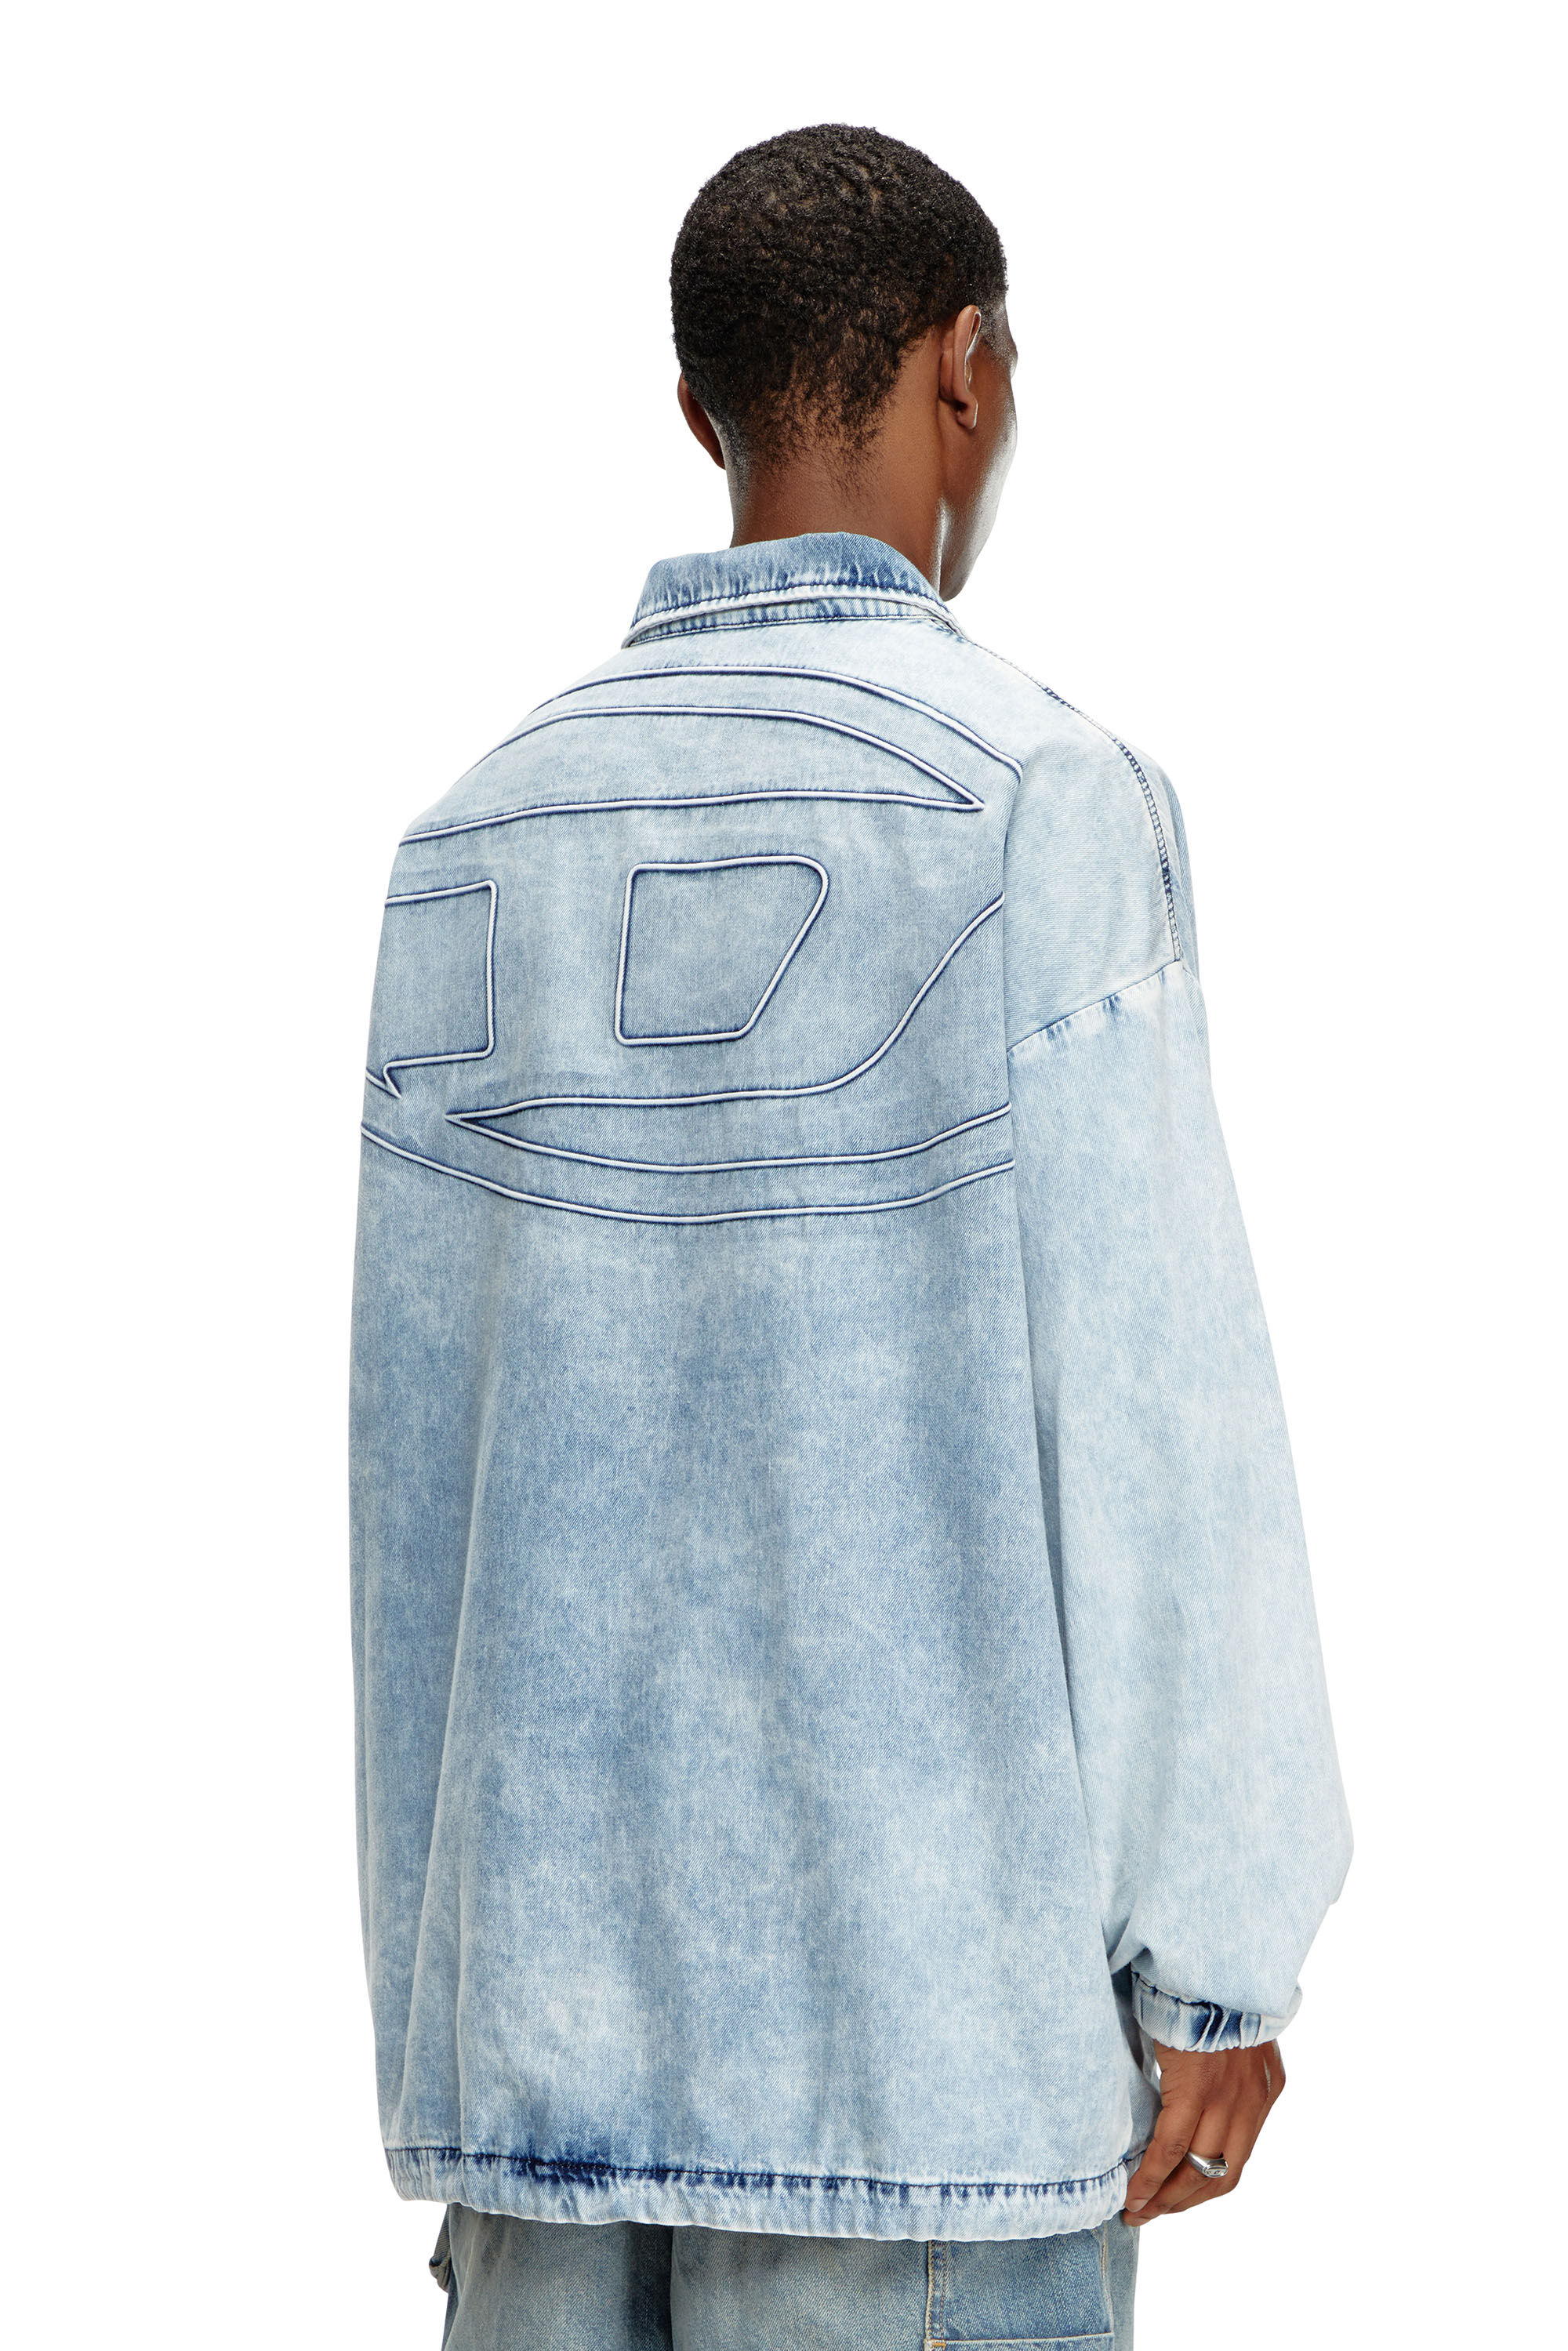 Diesel - D-KRAP-S1, Man Denim jacket with Oval D in Blue - Image 3